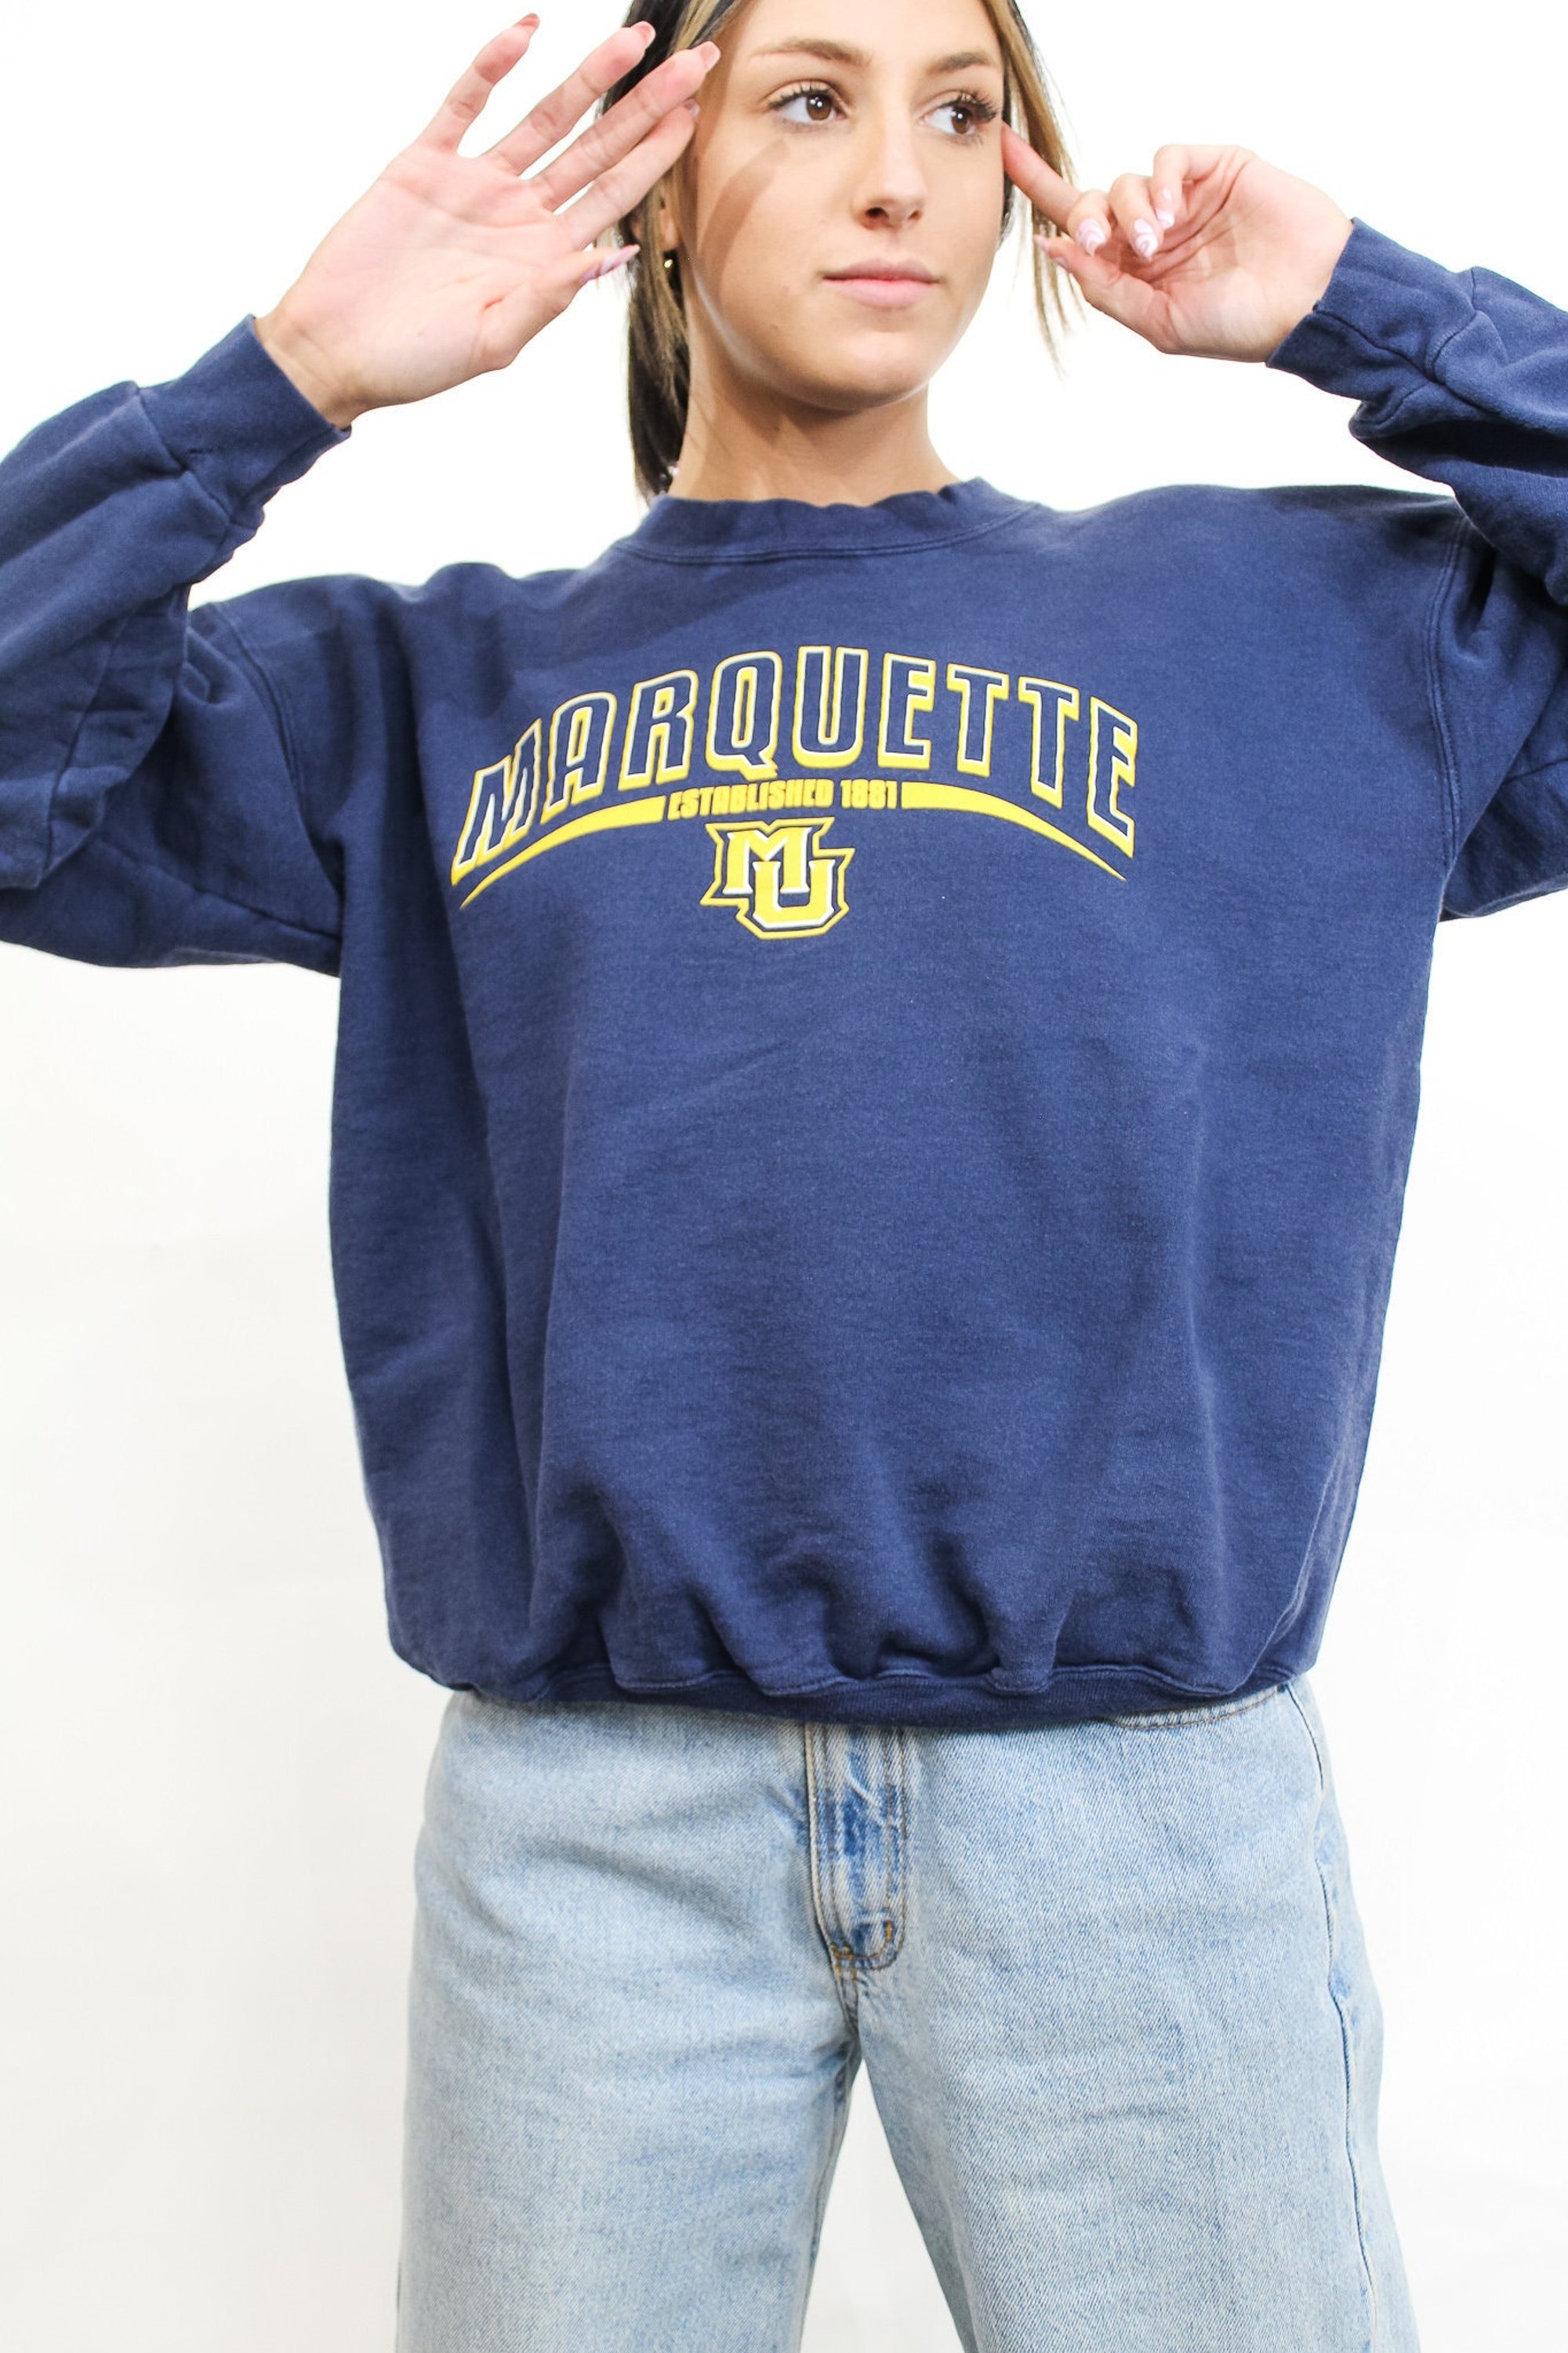 Marquette University Sweatshirt